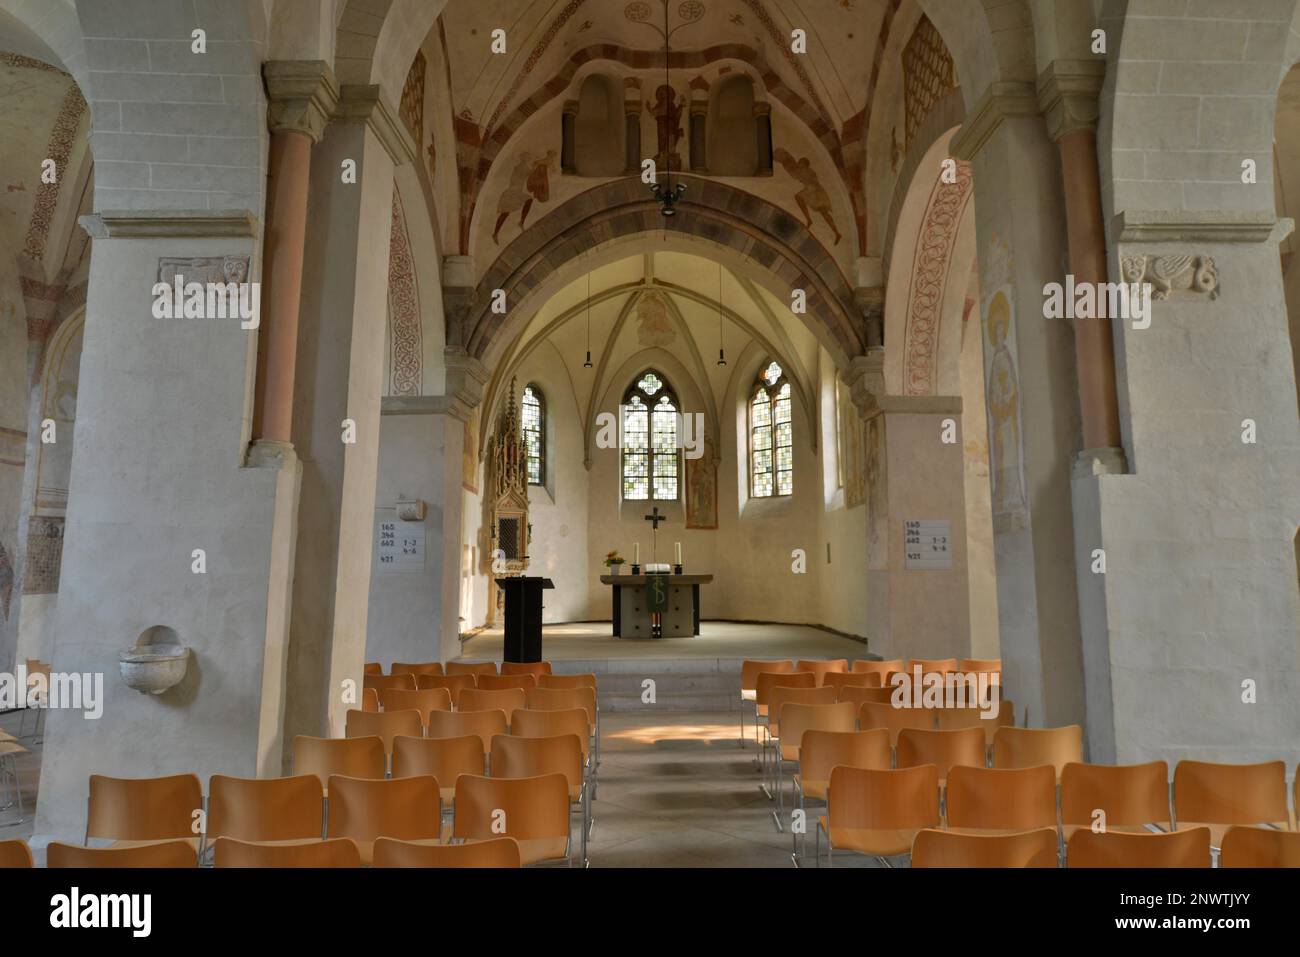 Eglise du village de Stiepel, Brockhauser Strasse, Stiepel, Bochum, Rhénanie-du-Nord-Westphalie, Allemagne Banque D'Images